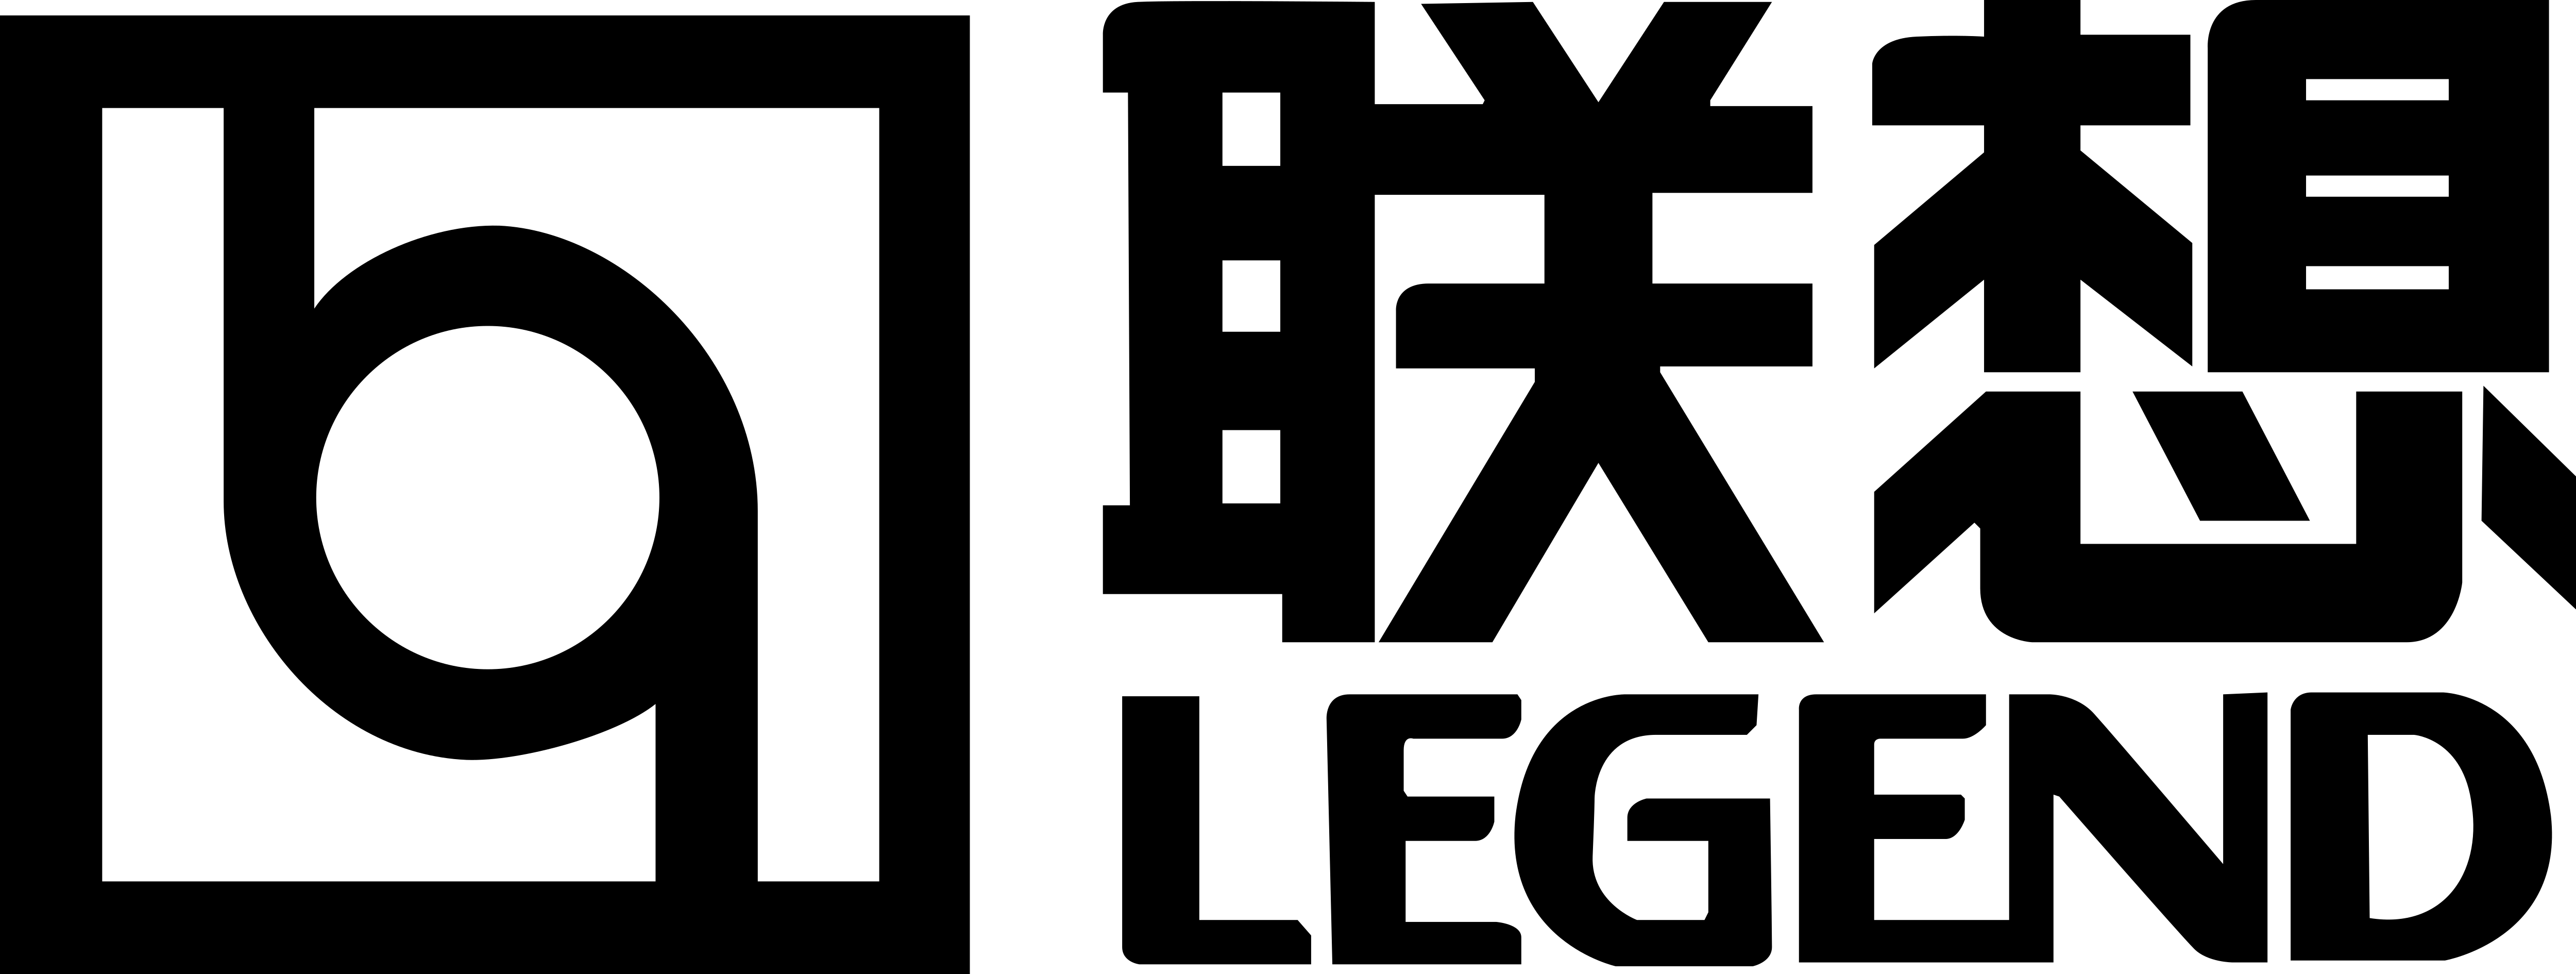 lenovo logo jpg